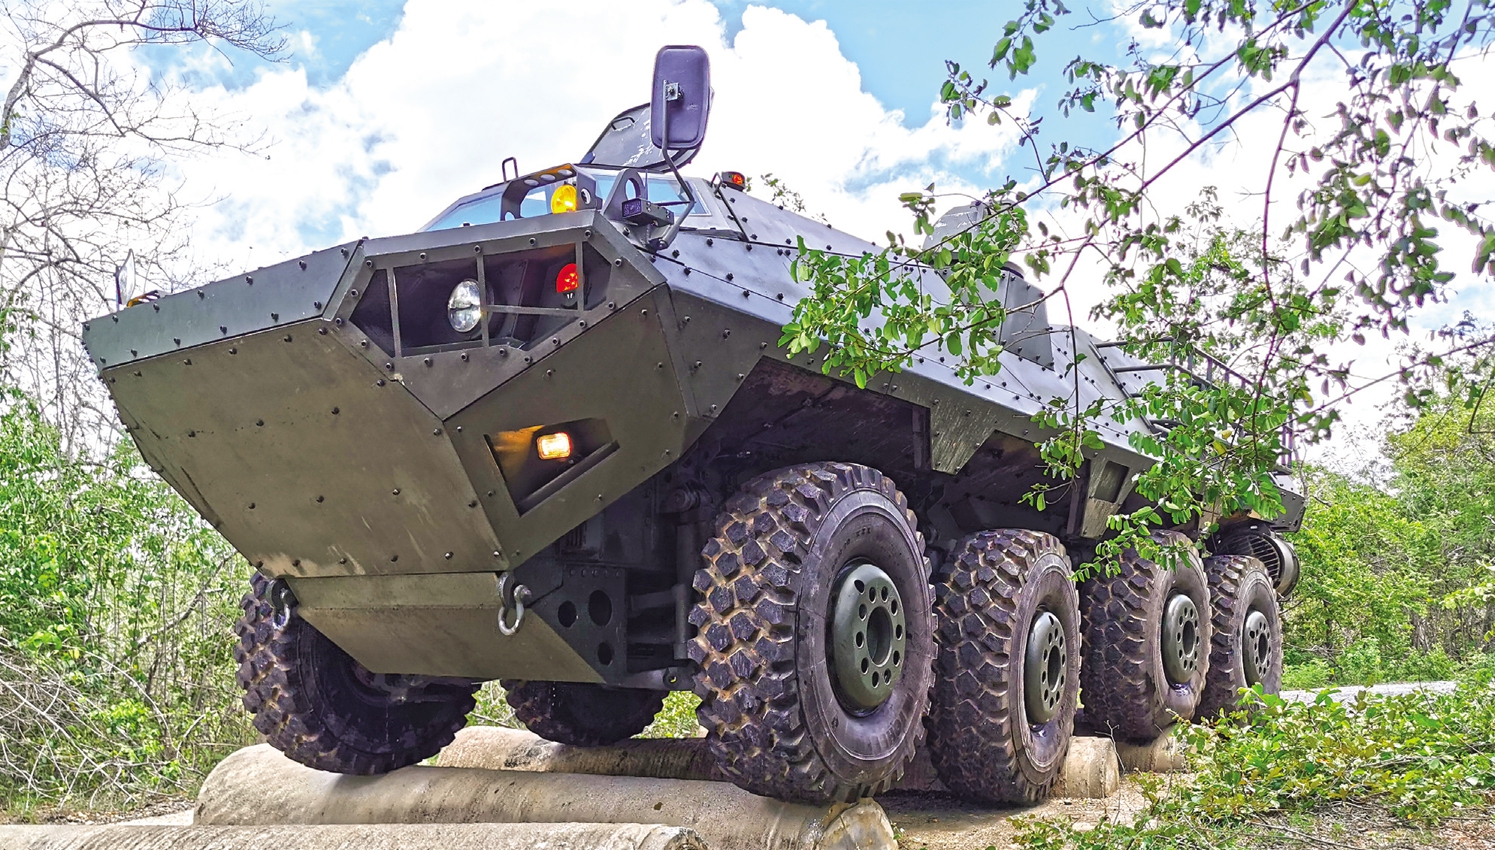 Panus R600 8x8 Infantry Fighting Vehicle